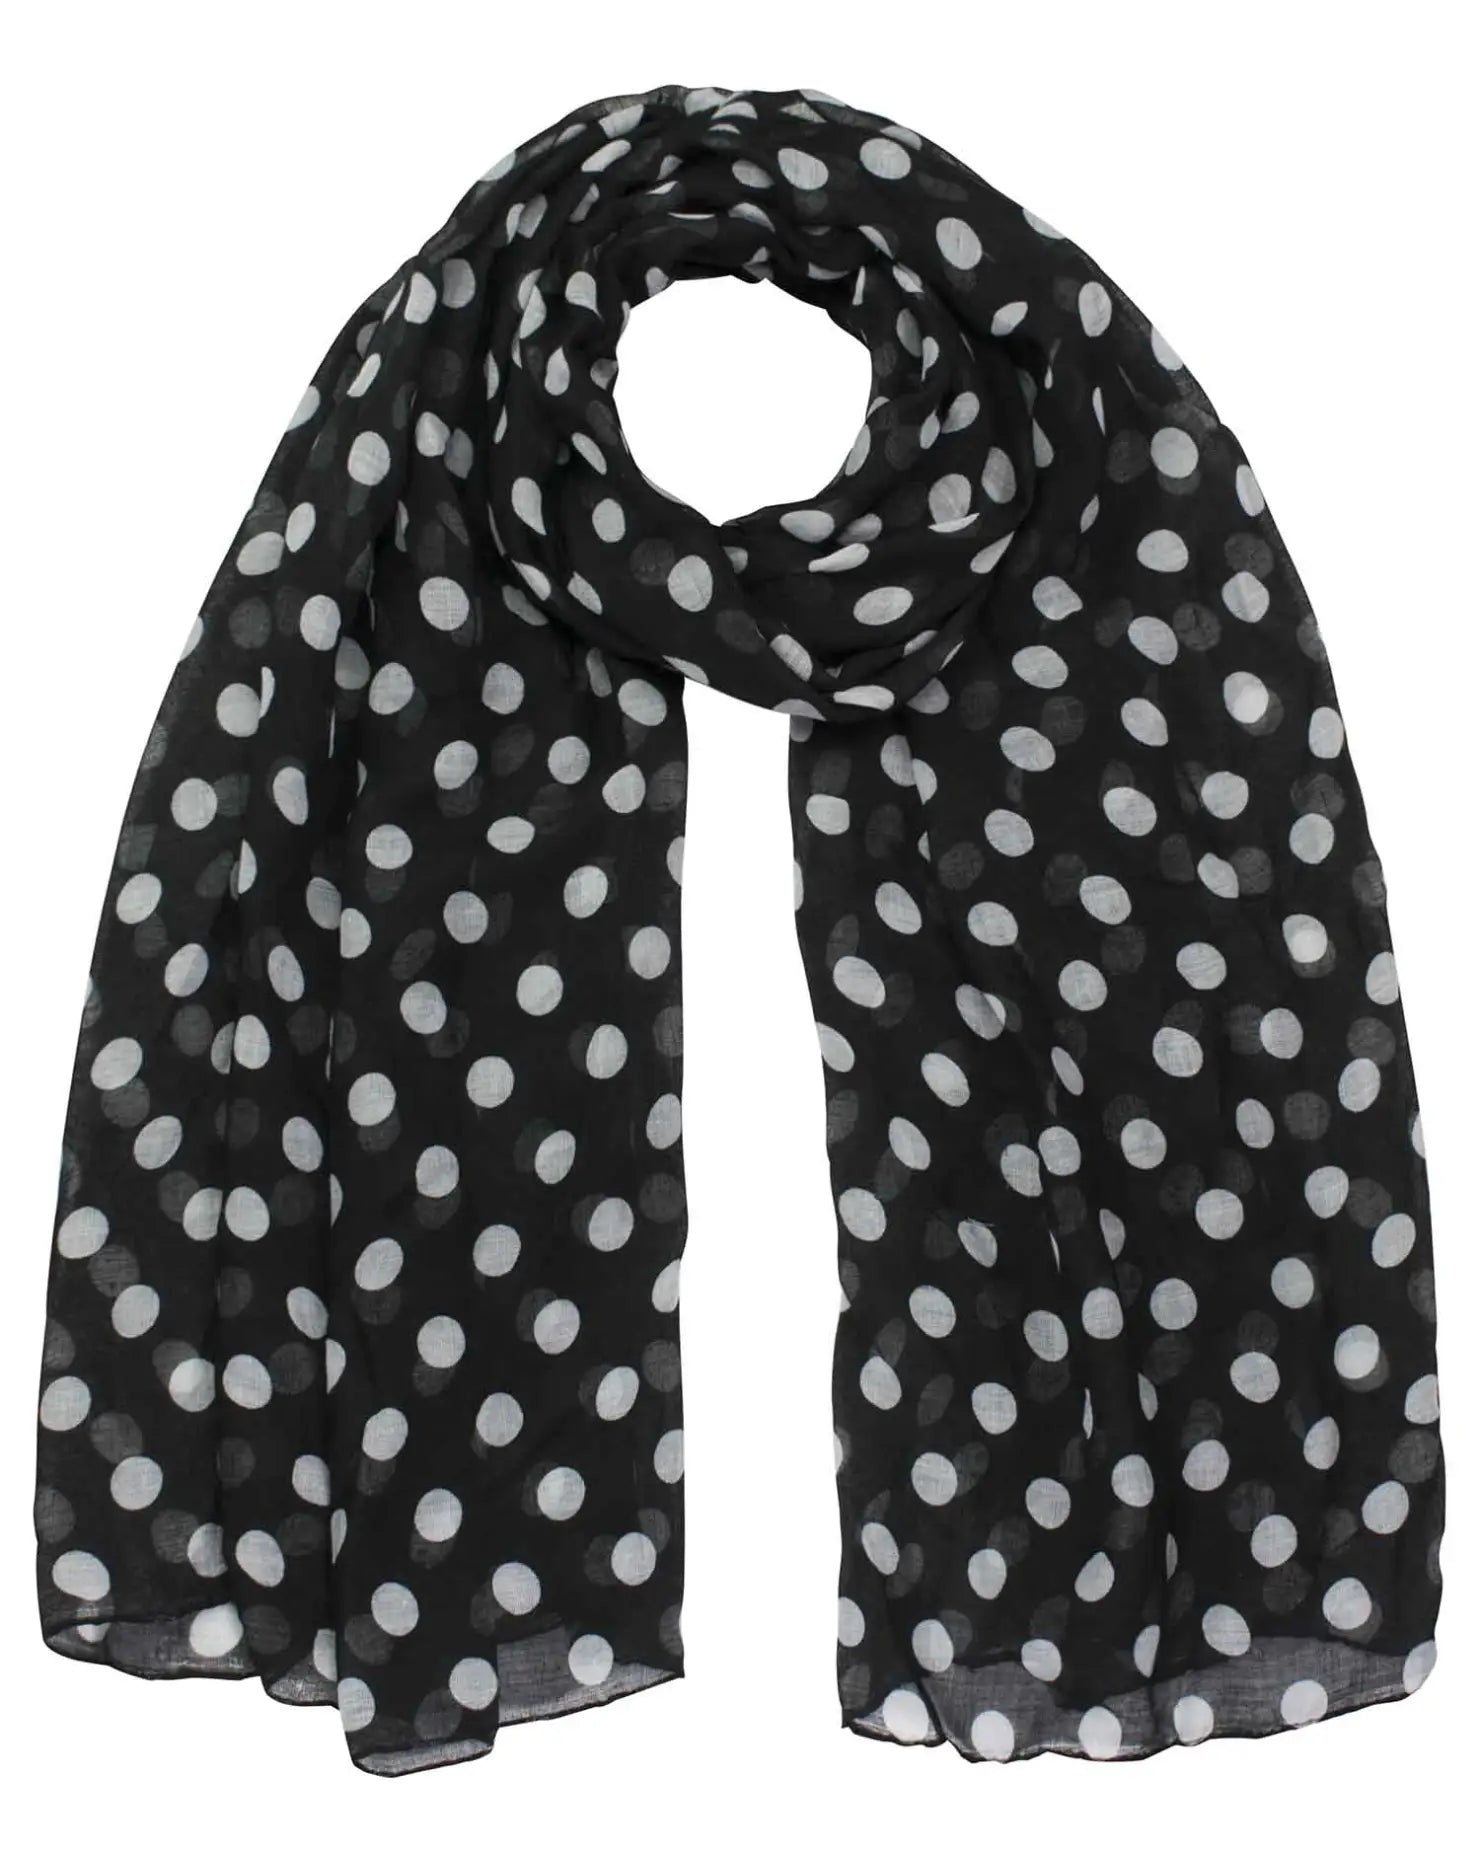 Retro polka dot scarf for women, black and white oversized maxi design